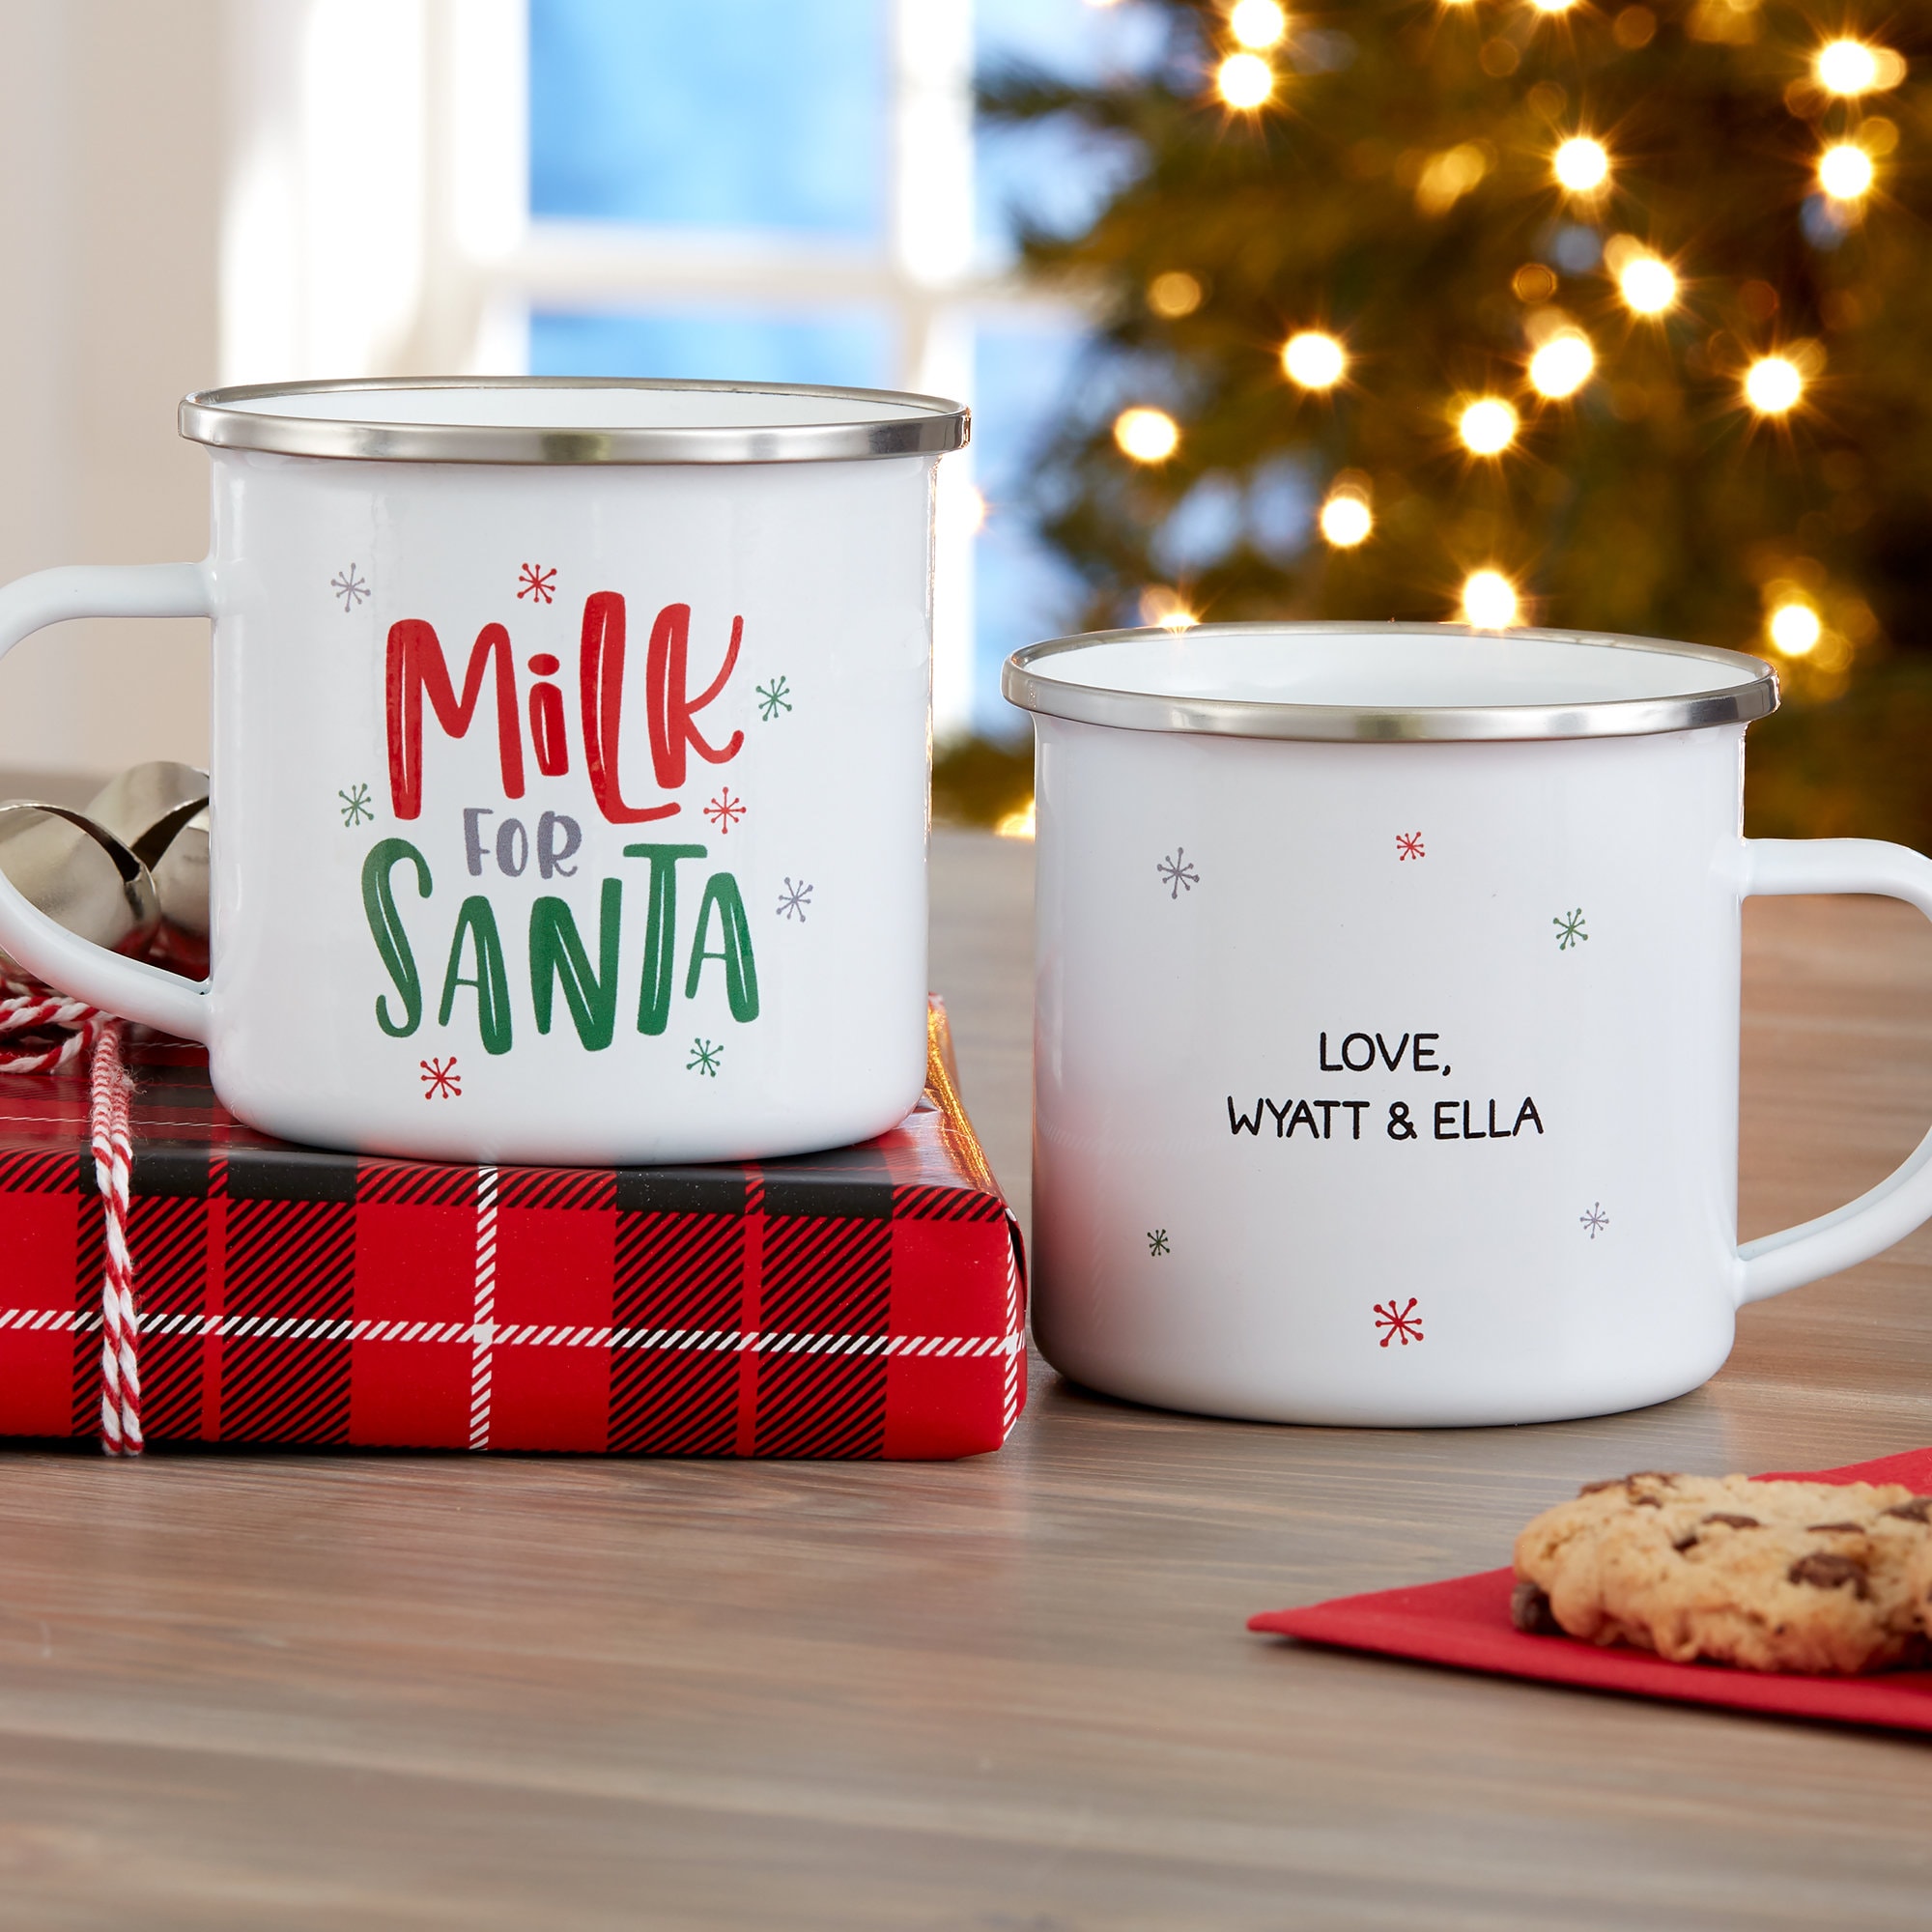 Milk and Cookies for Santa Mug by Burton & Burton